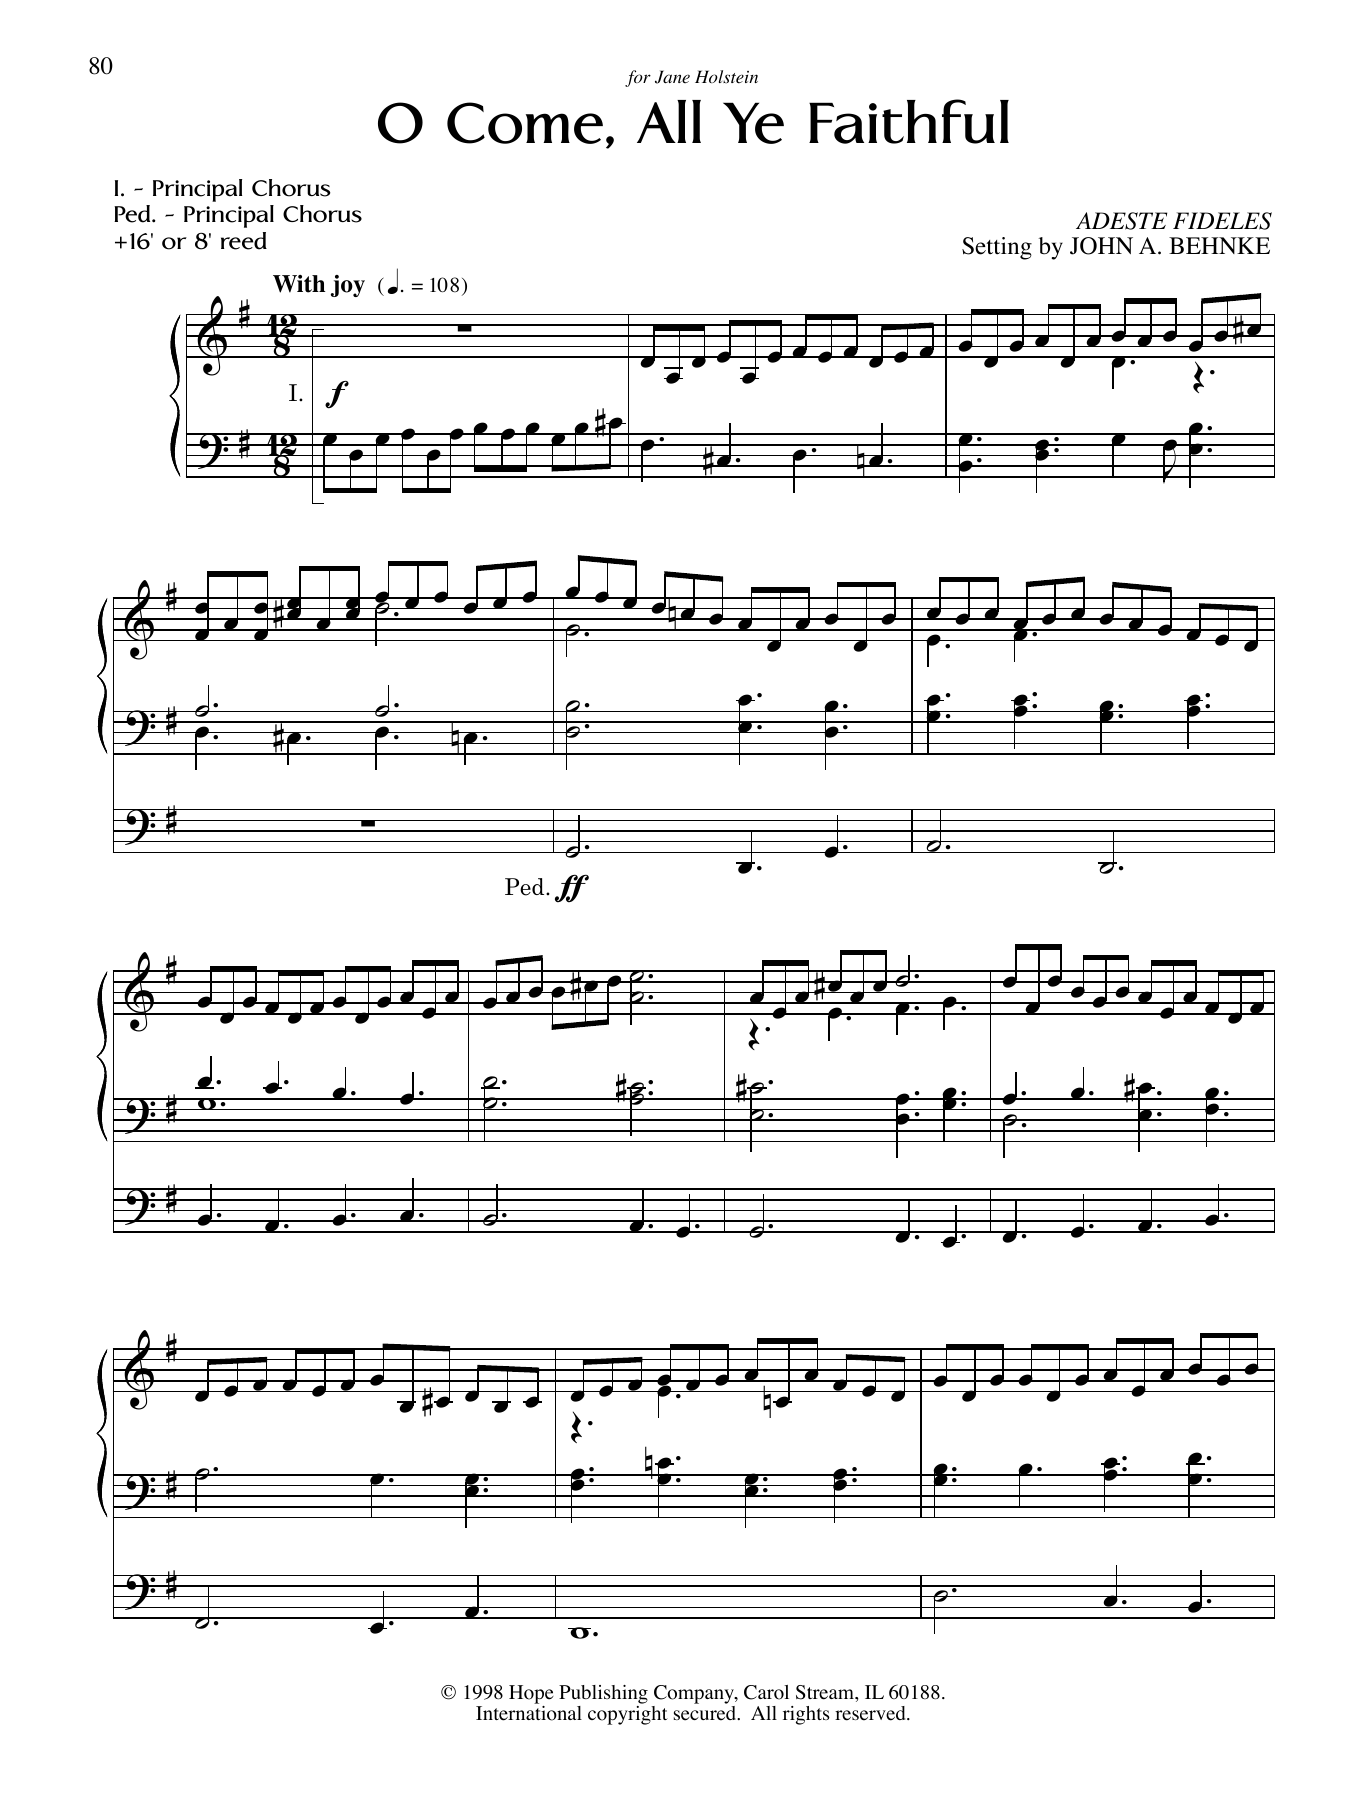 John A. Behnke O Come, All Ye Faithful Sheet Music Notes & Chords for Organ - Download or Print PDF